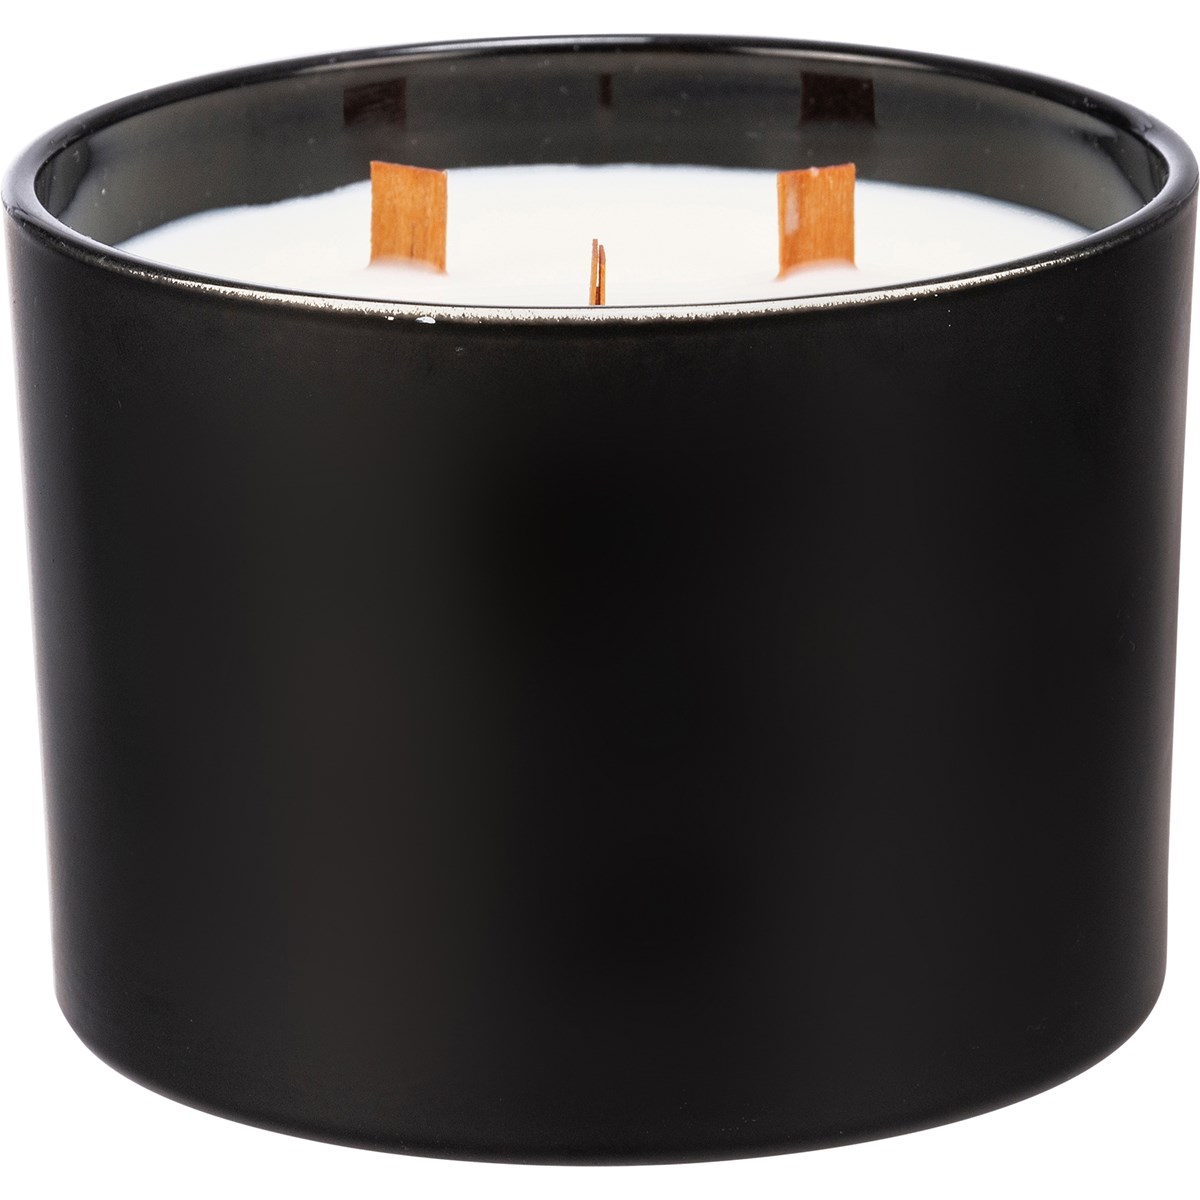 Kindness Jar Candle - Soy Wax, Glass, Wood